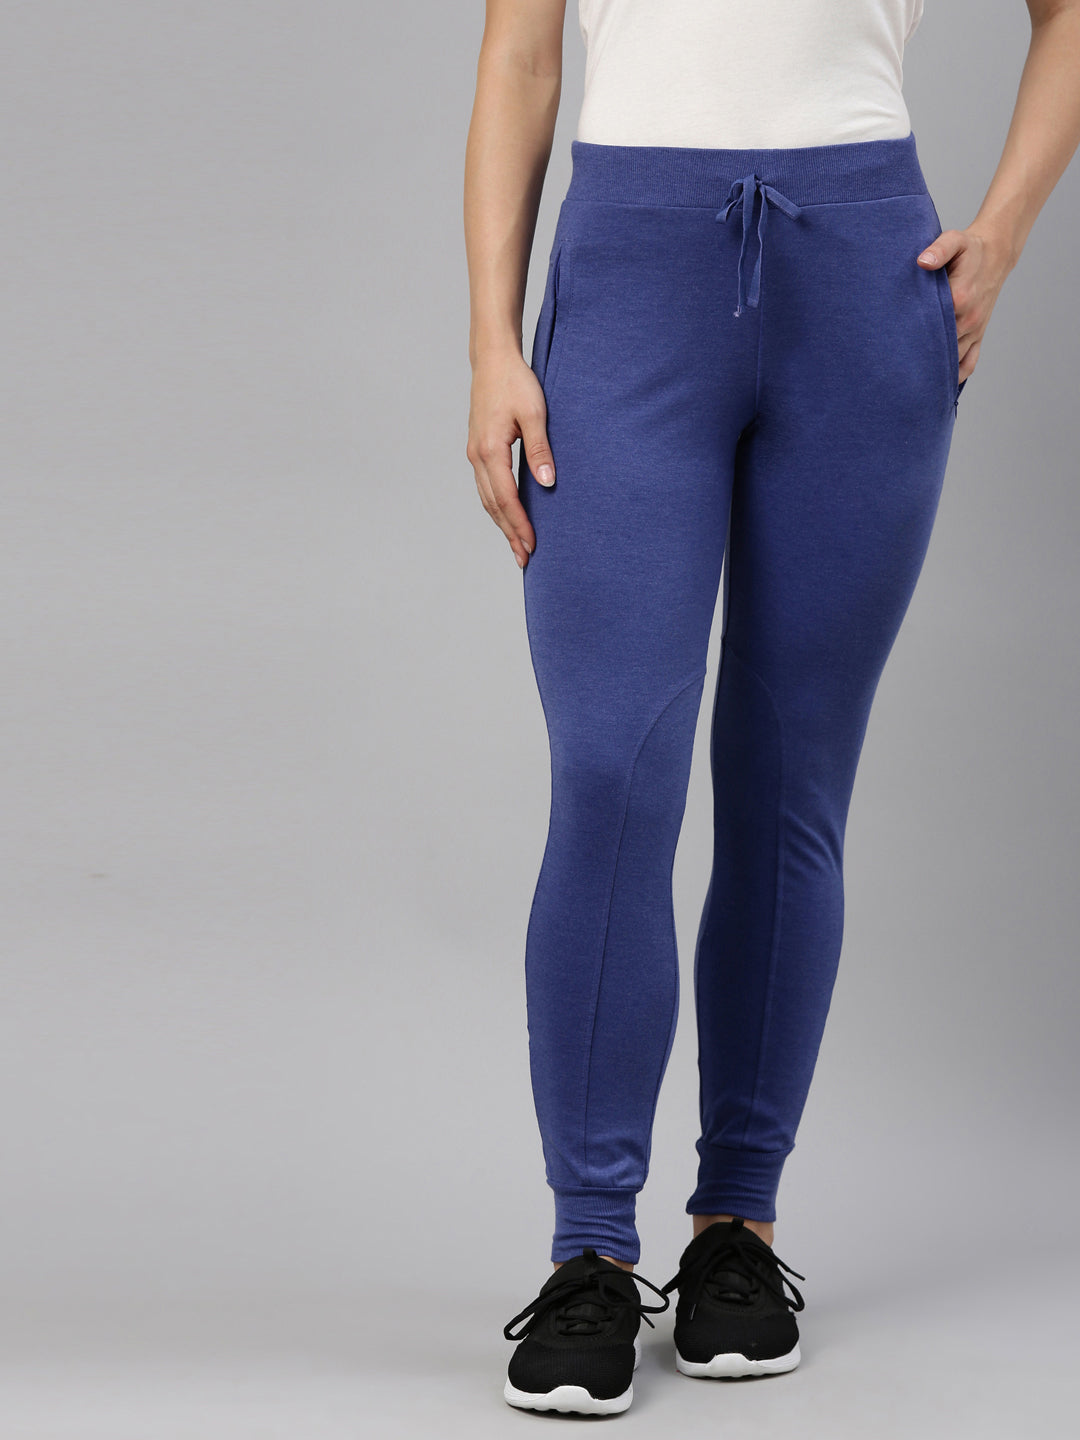 Womens Narrow Bottom Joggers With Side Pockets - Blue Melange